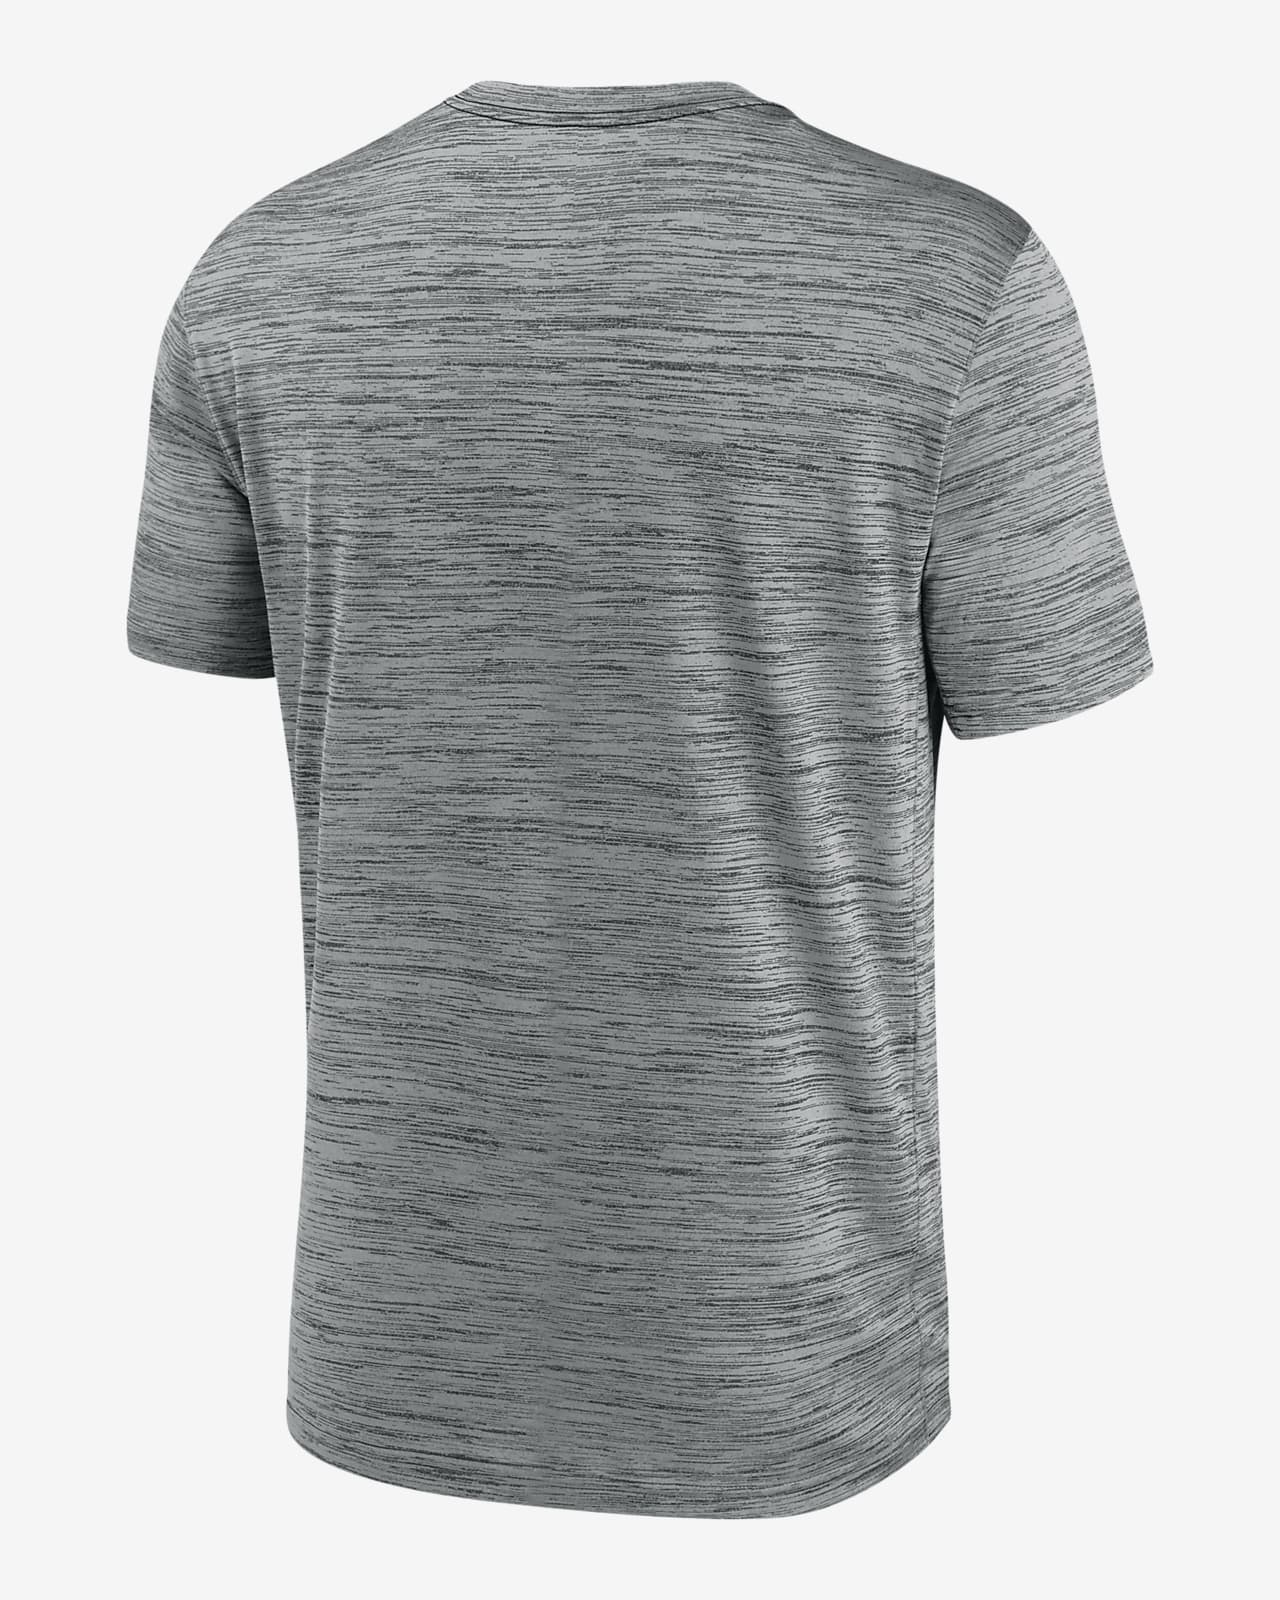 Nike Men's Dallas Cowboys Velocity T-Shirt - Navy - XL Each